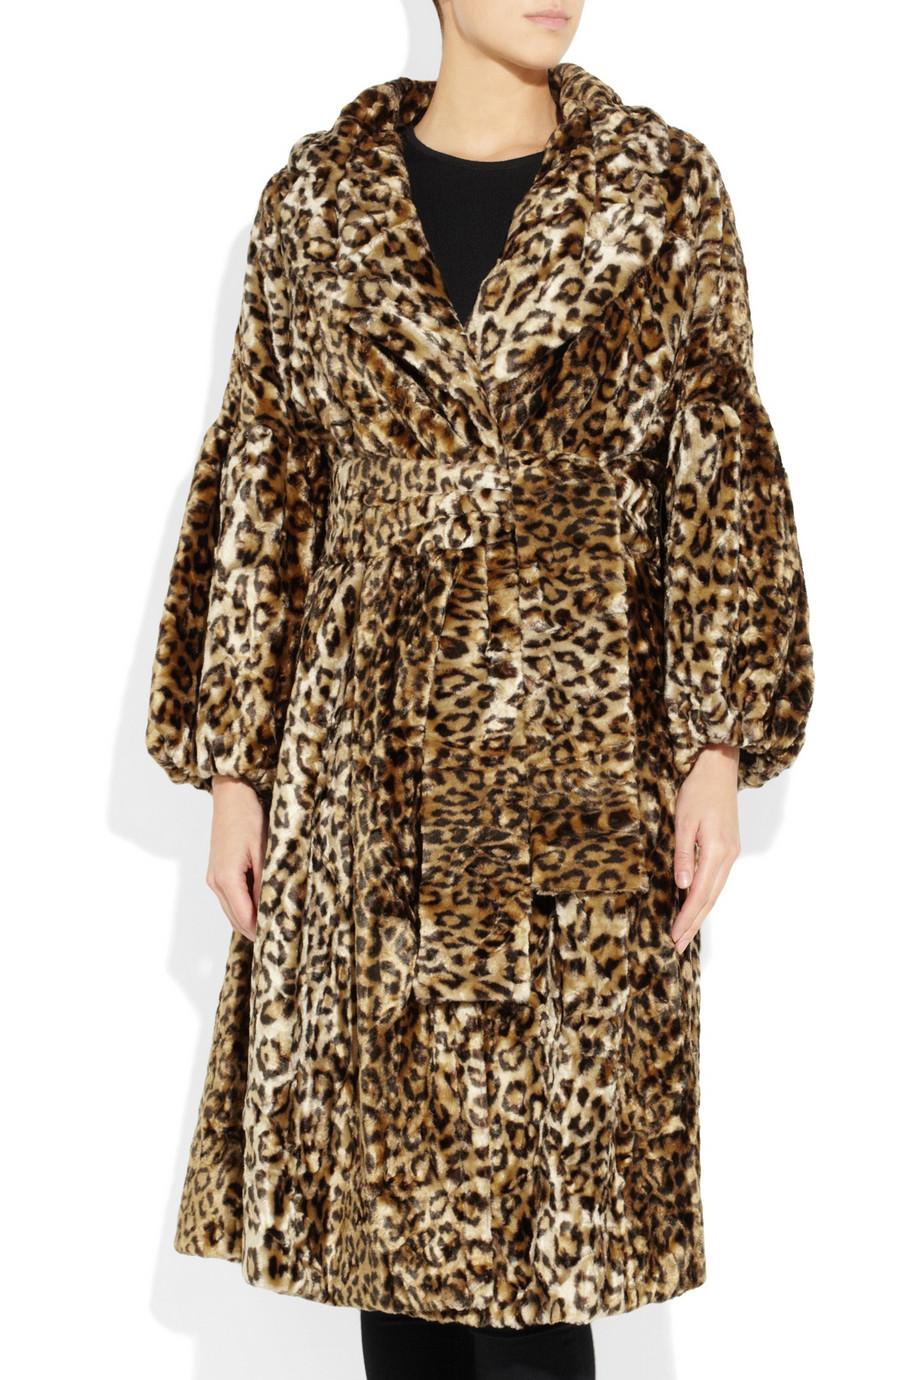 Nina Ricci Leopardprint Faux Fur Coat - Lyst